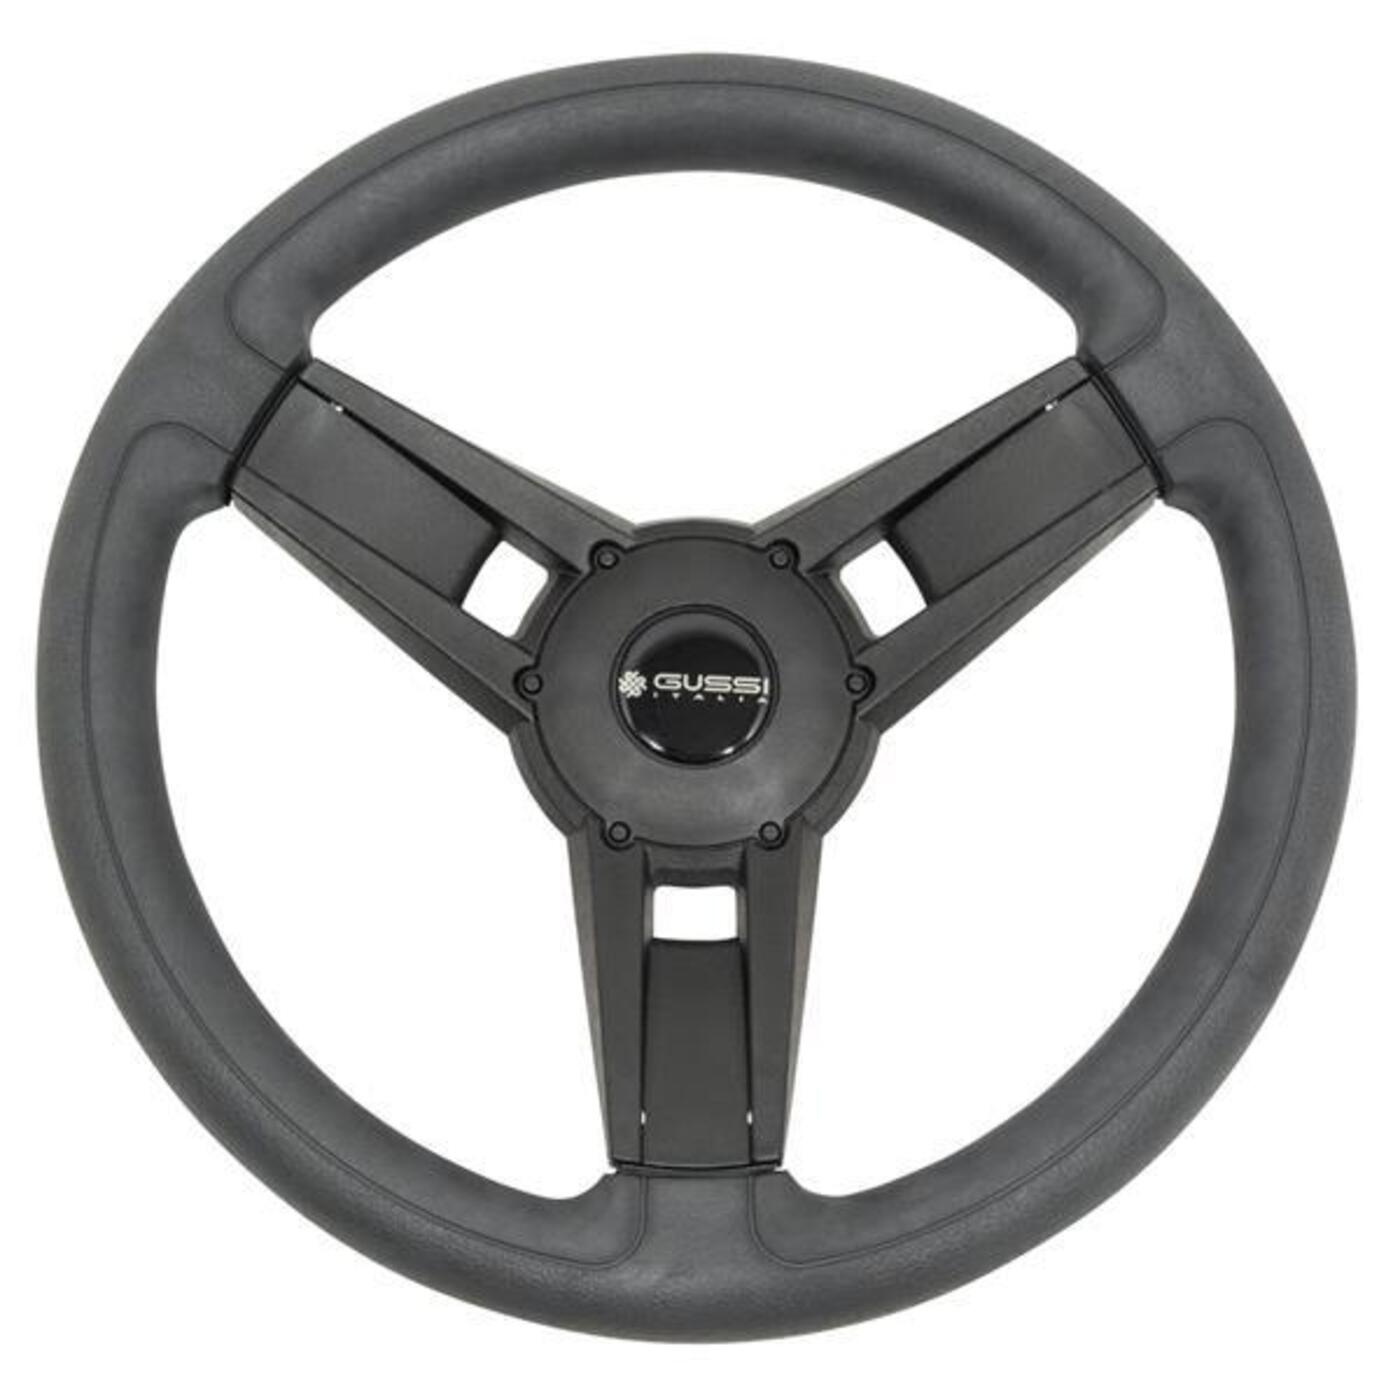 Gussi Italia Giazza Black Steering Wheel For All Club Car DS Models 06-121